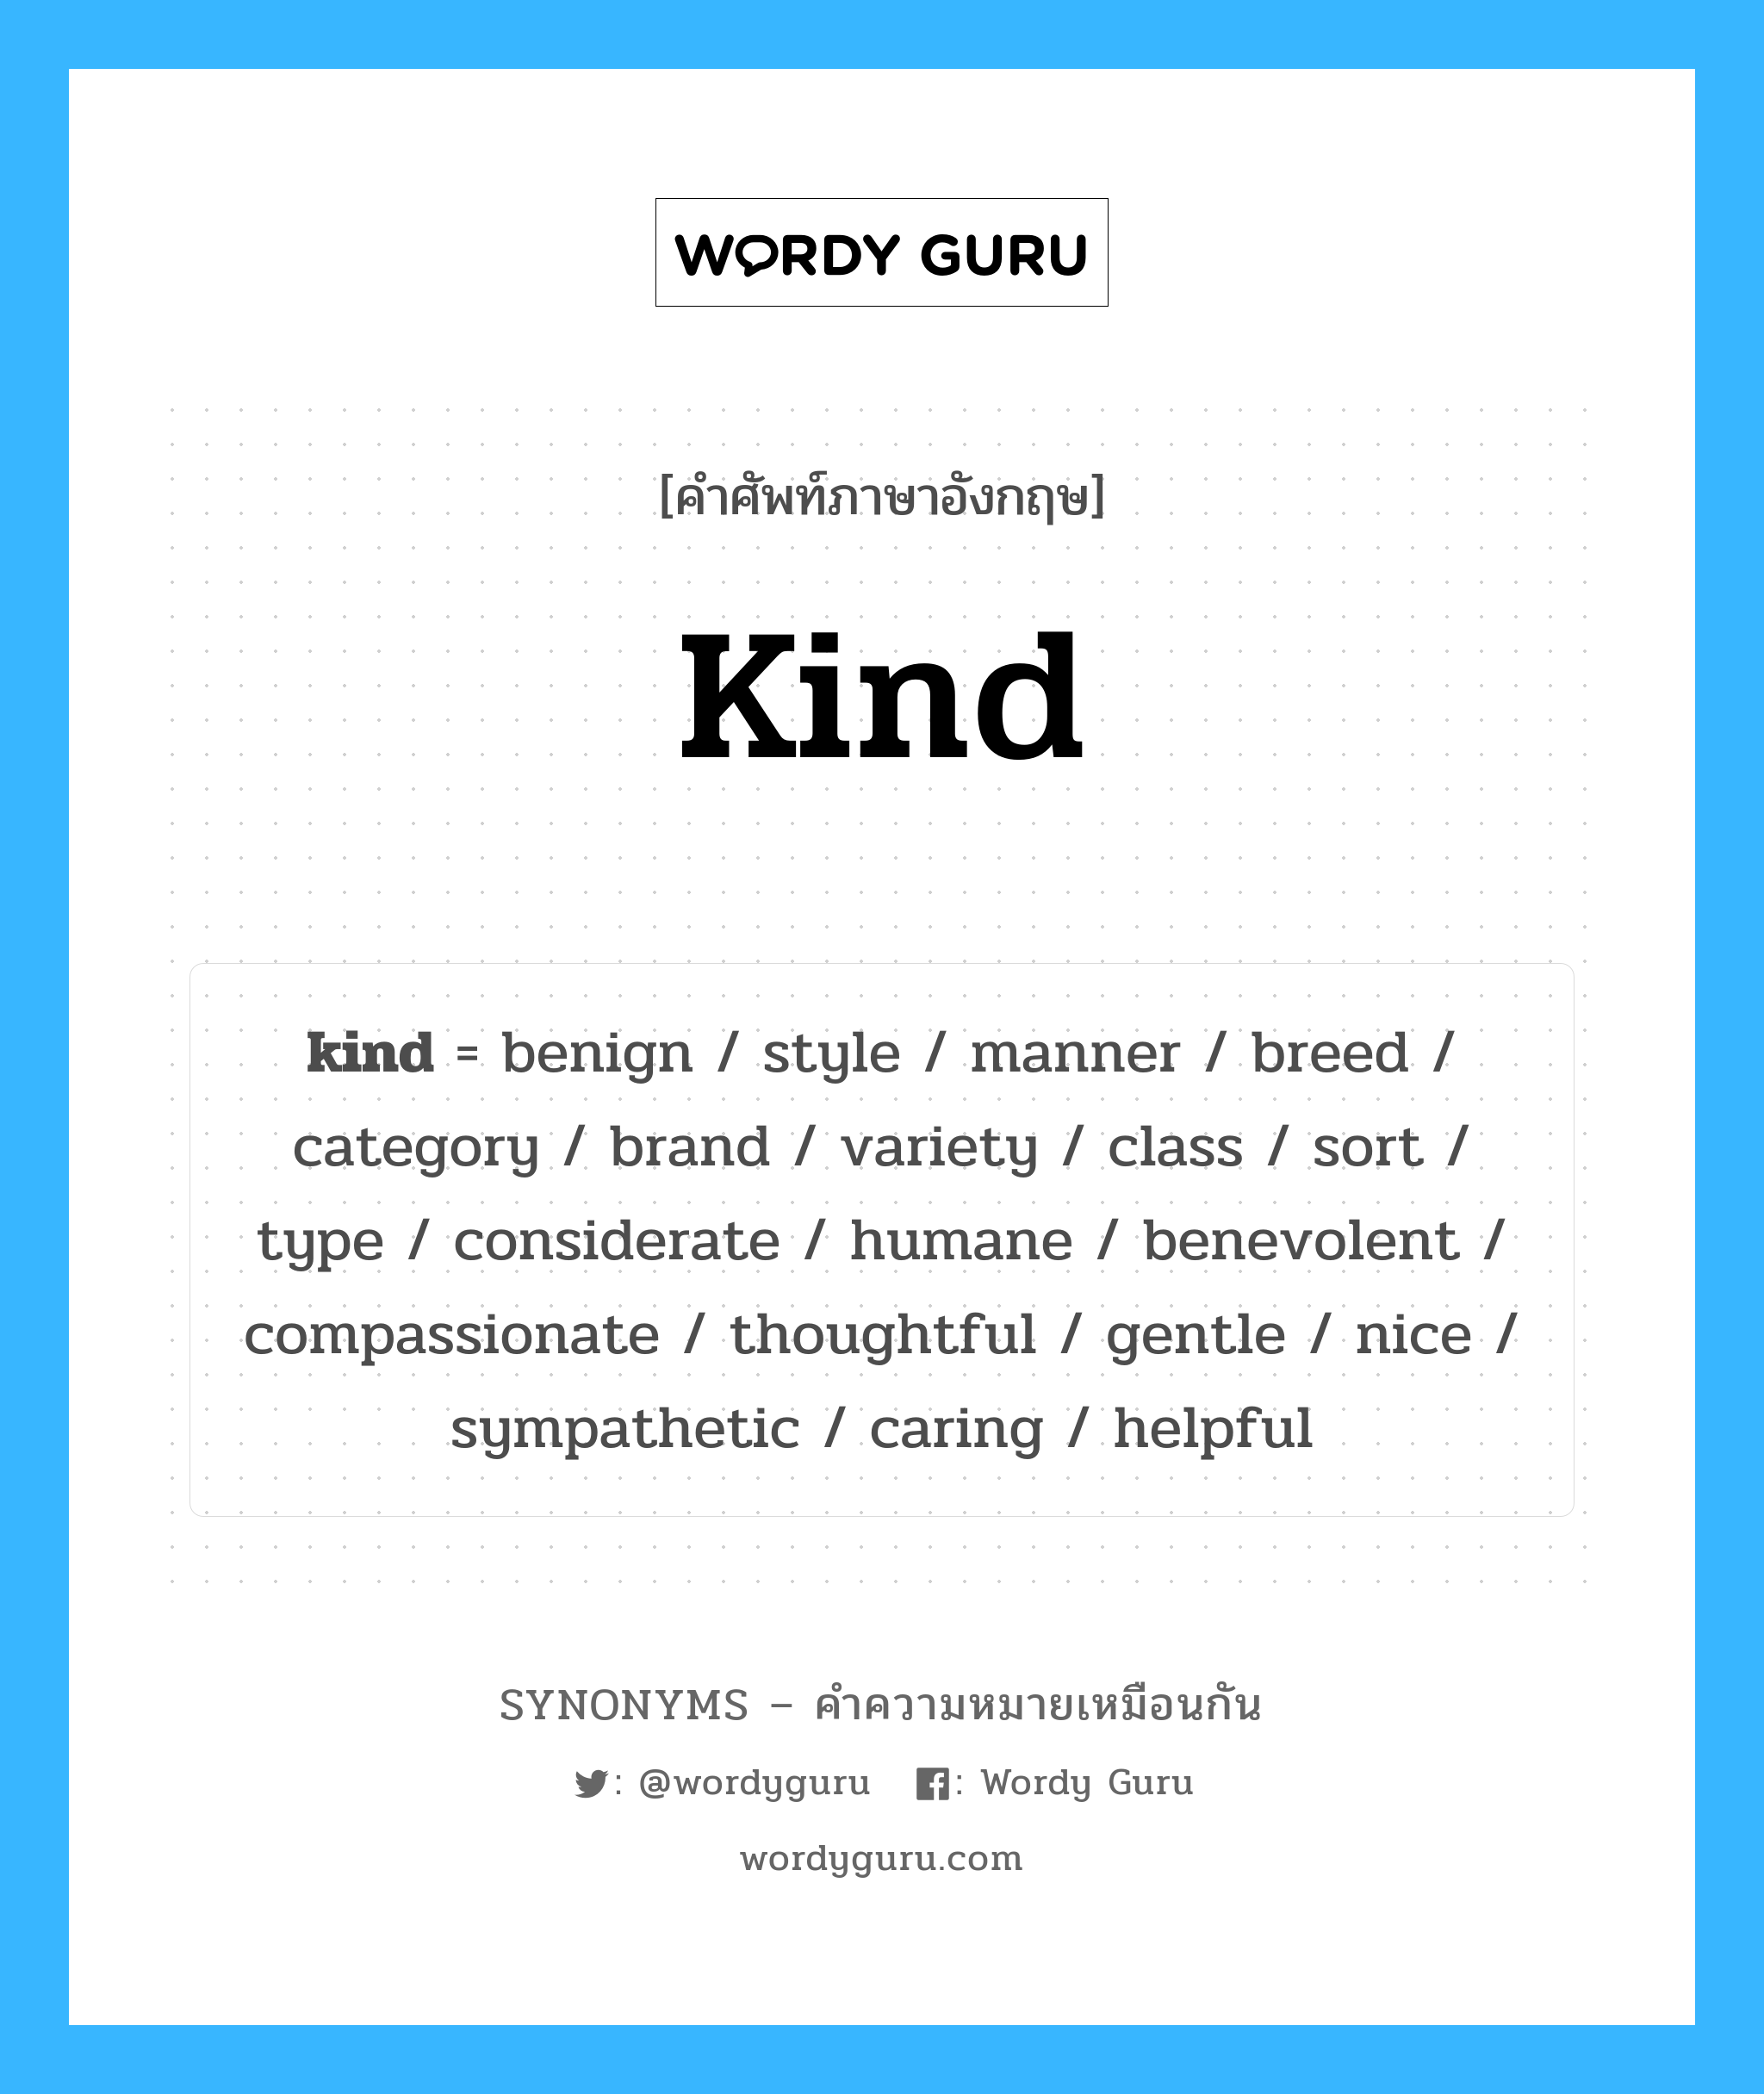 category เป็นหนึ่งใน kind และมีคำอื่น ๆ อีกดังนี้, คำศัพท์ภาษาอังกฤษ category ความหมายคล้ายกันกับ kind แปลว่า ประเภท หมวด kind